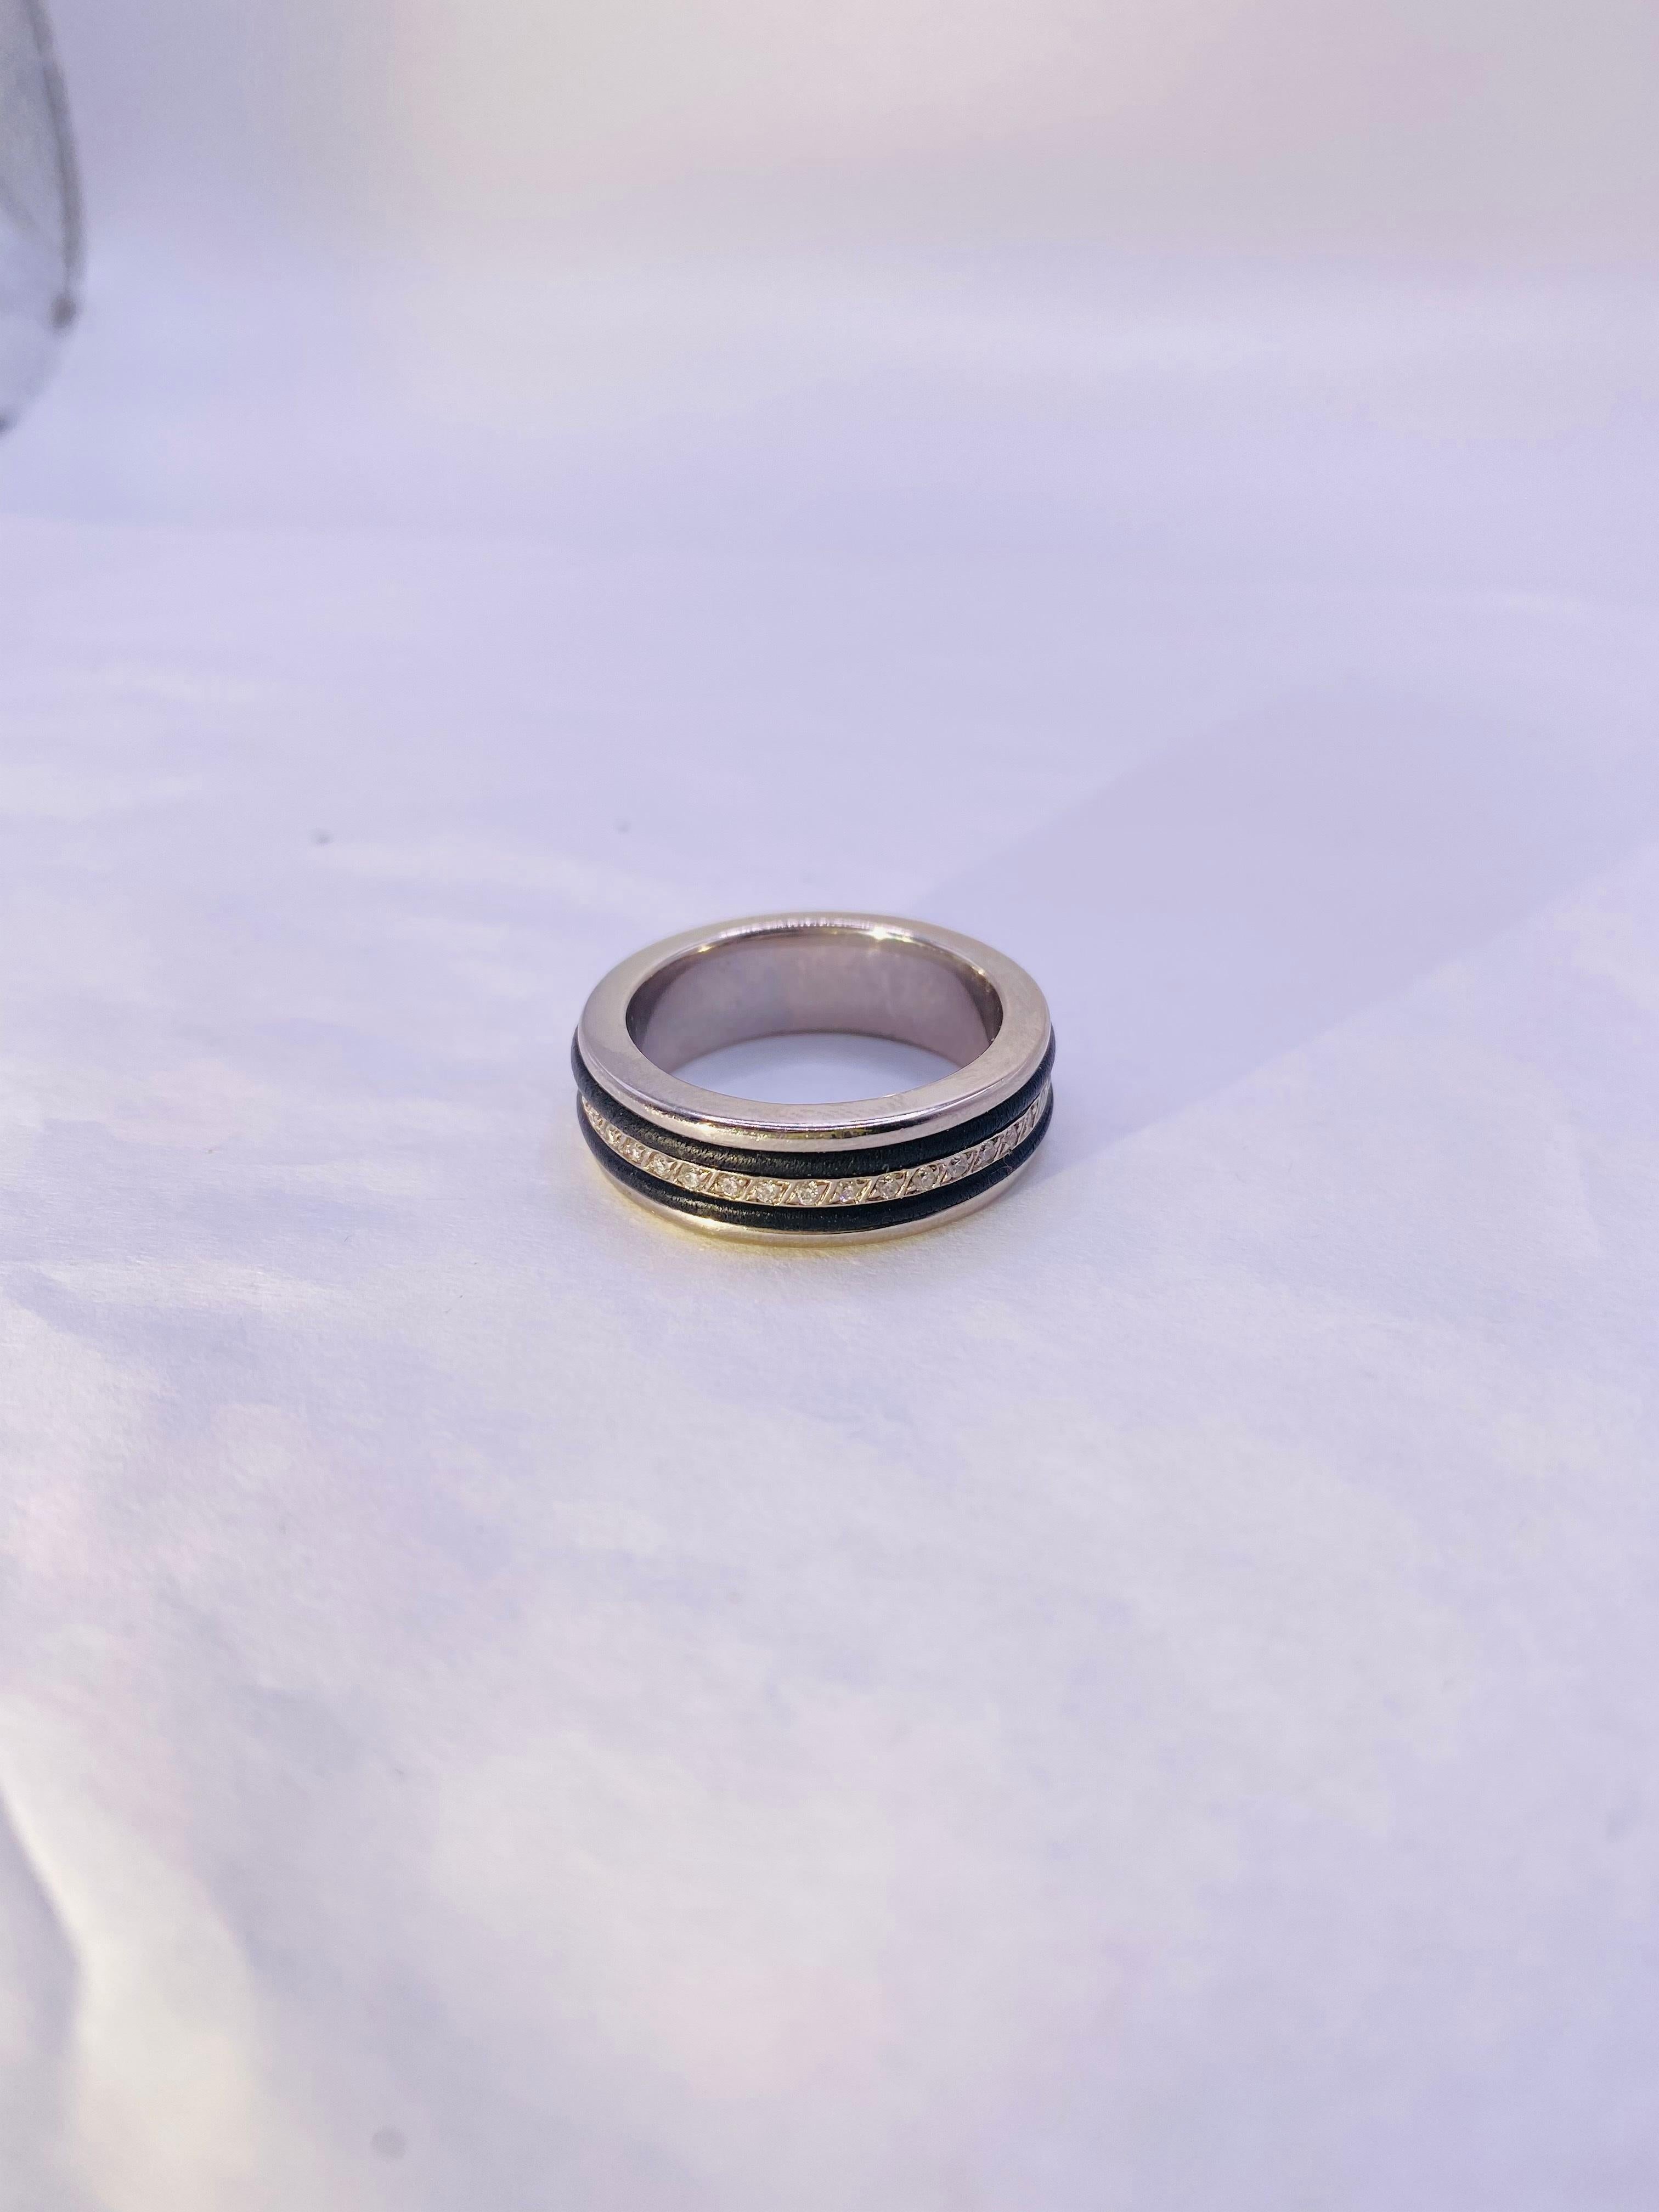 palladium rings for sale